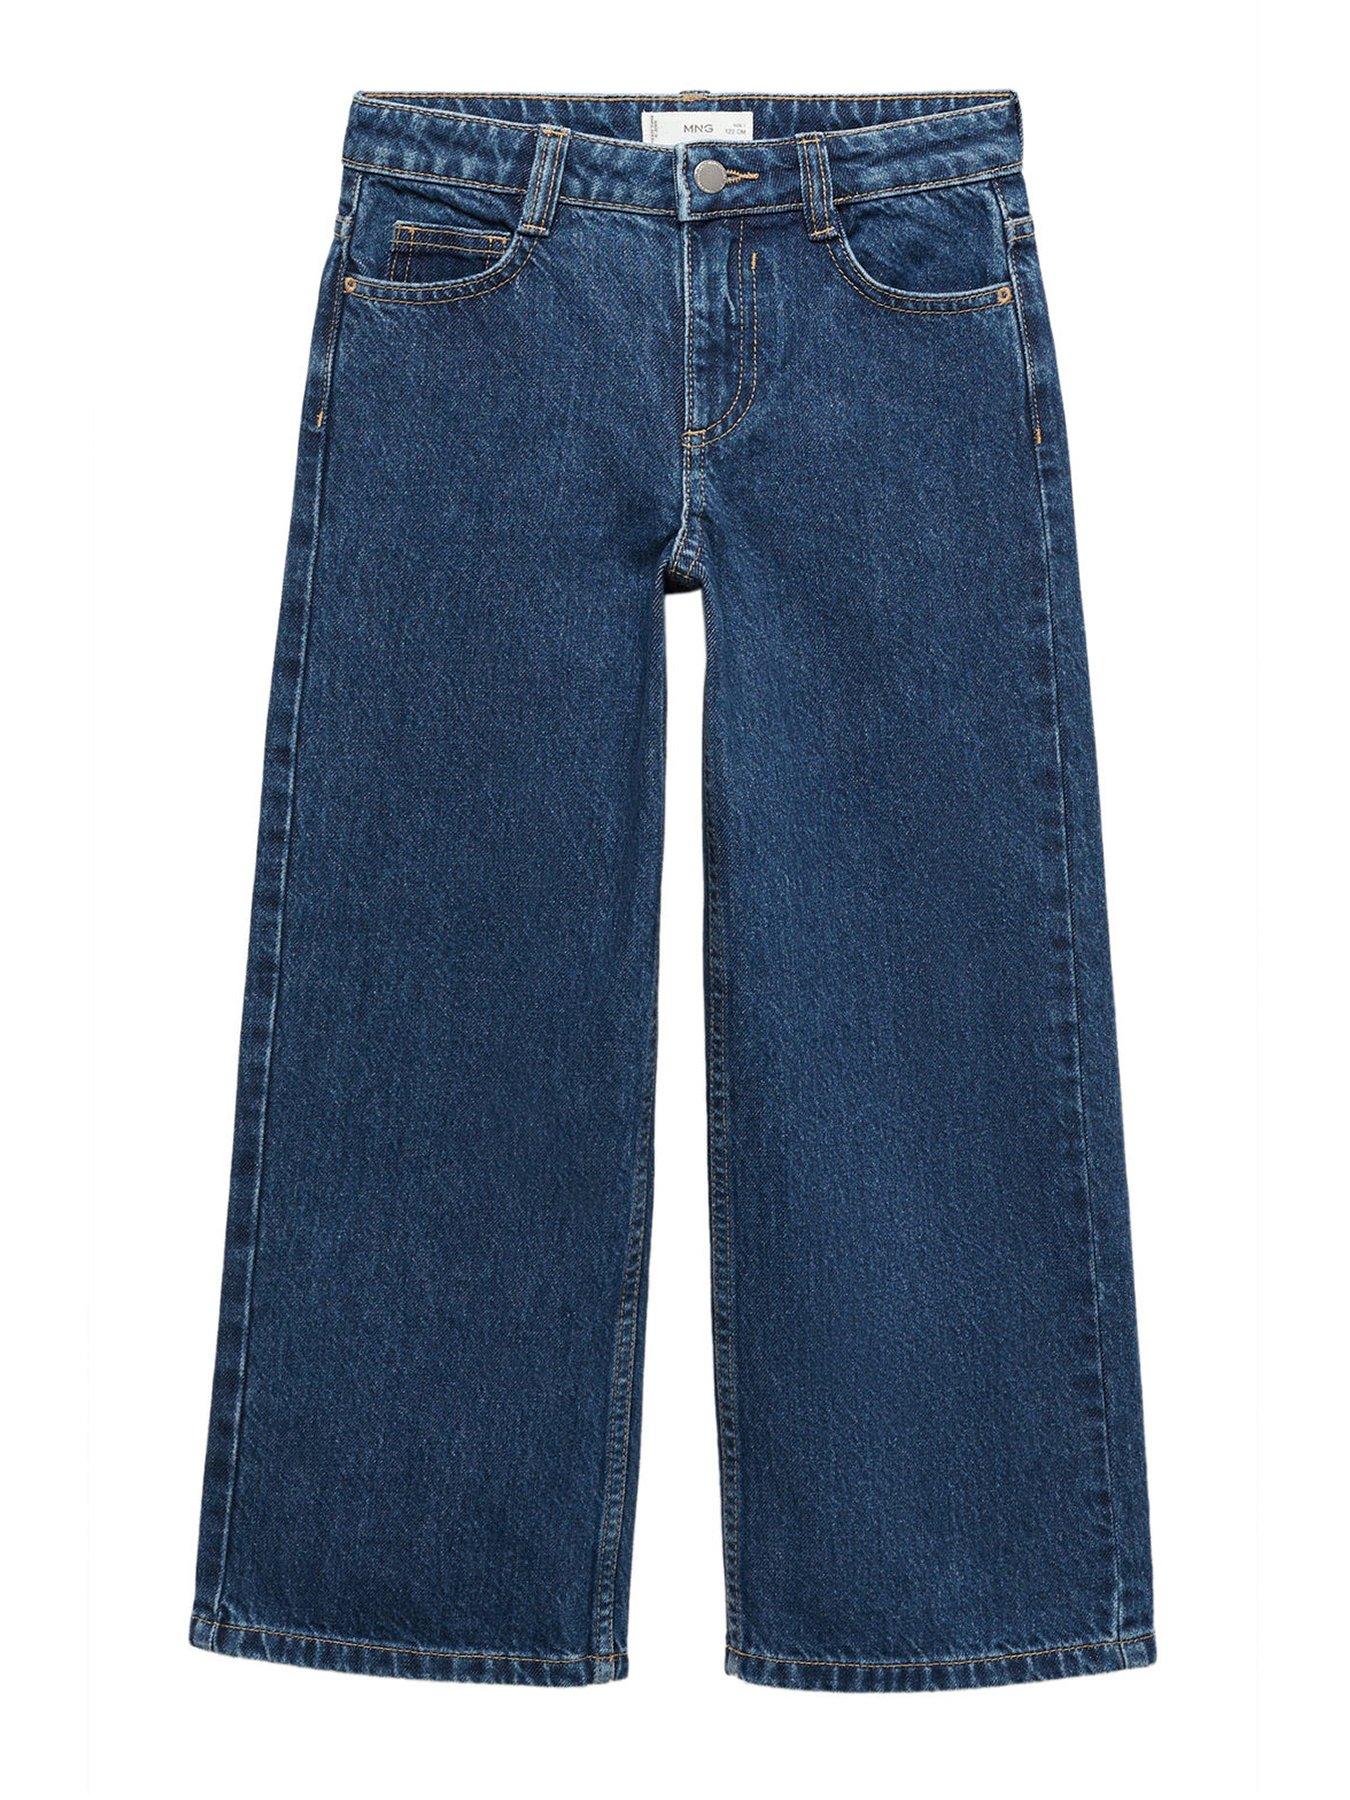 1826 Women's Premium Plus Size Dark Blue/Black Denim Jeans Short Stretch  Ps-481 (14, black) at  Women's Jeans store